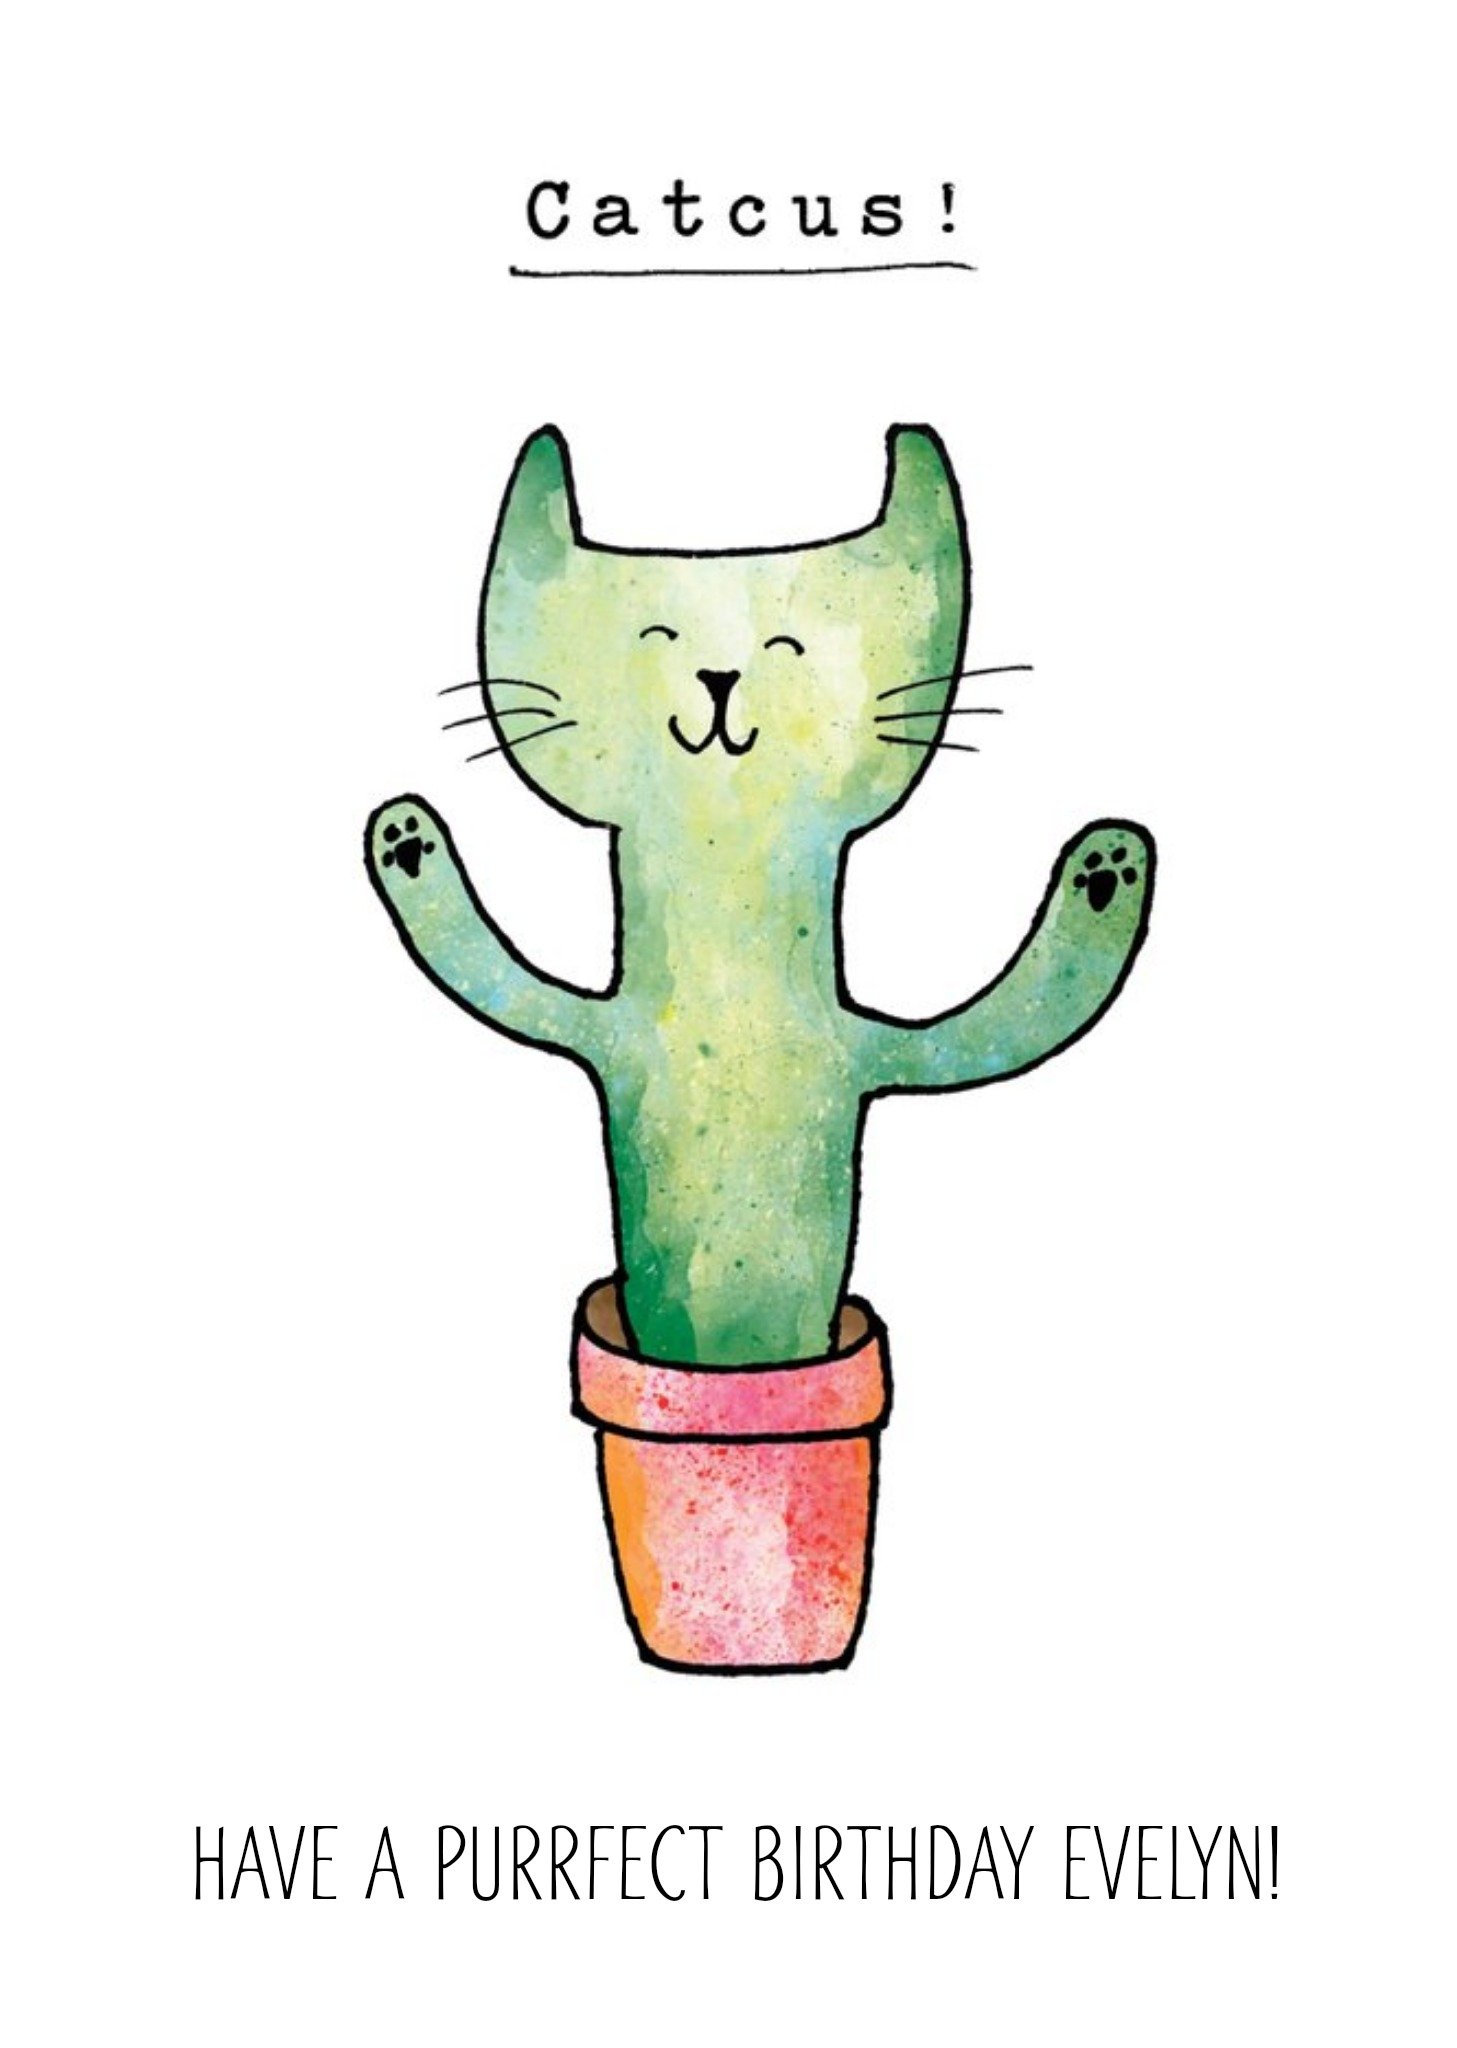 Moonpig Funny Cat Cactus Catcus Birthday Card, Large